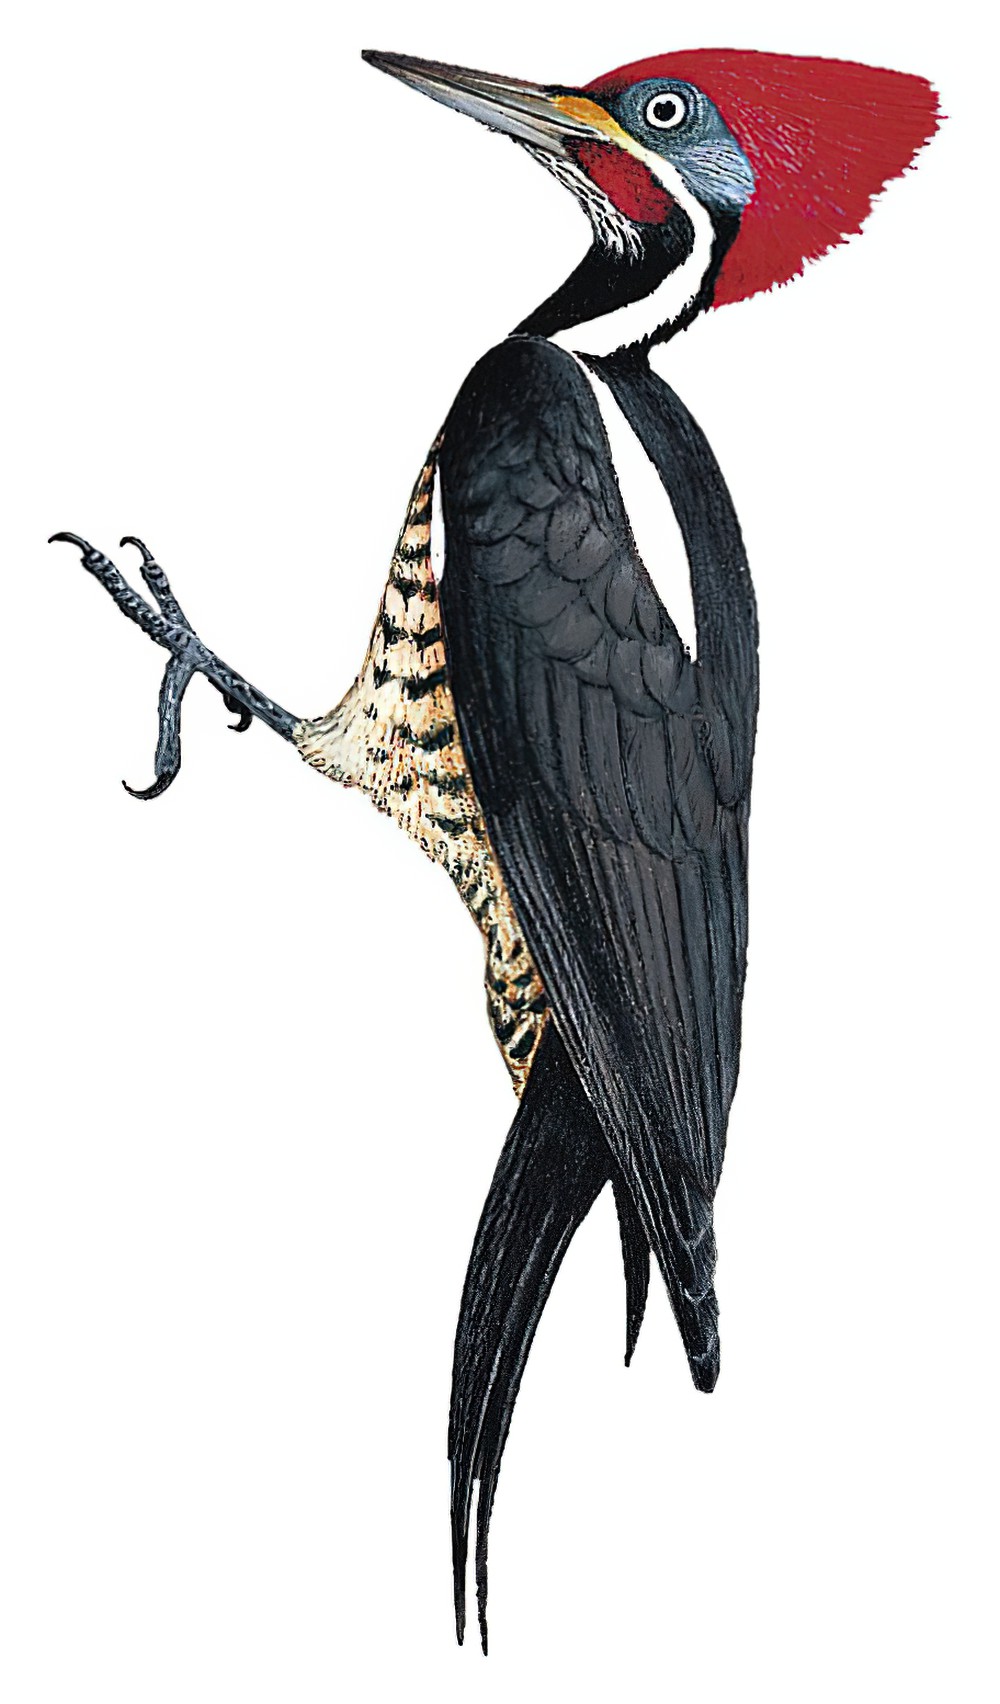 Lineated Woodpecker / Dryocopus lineatus